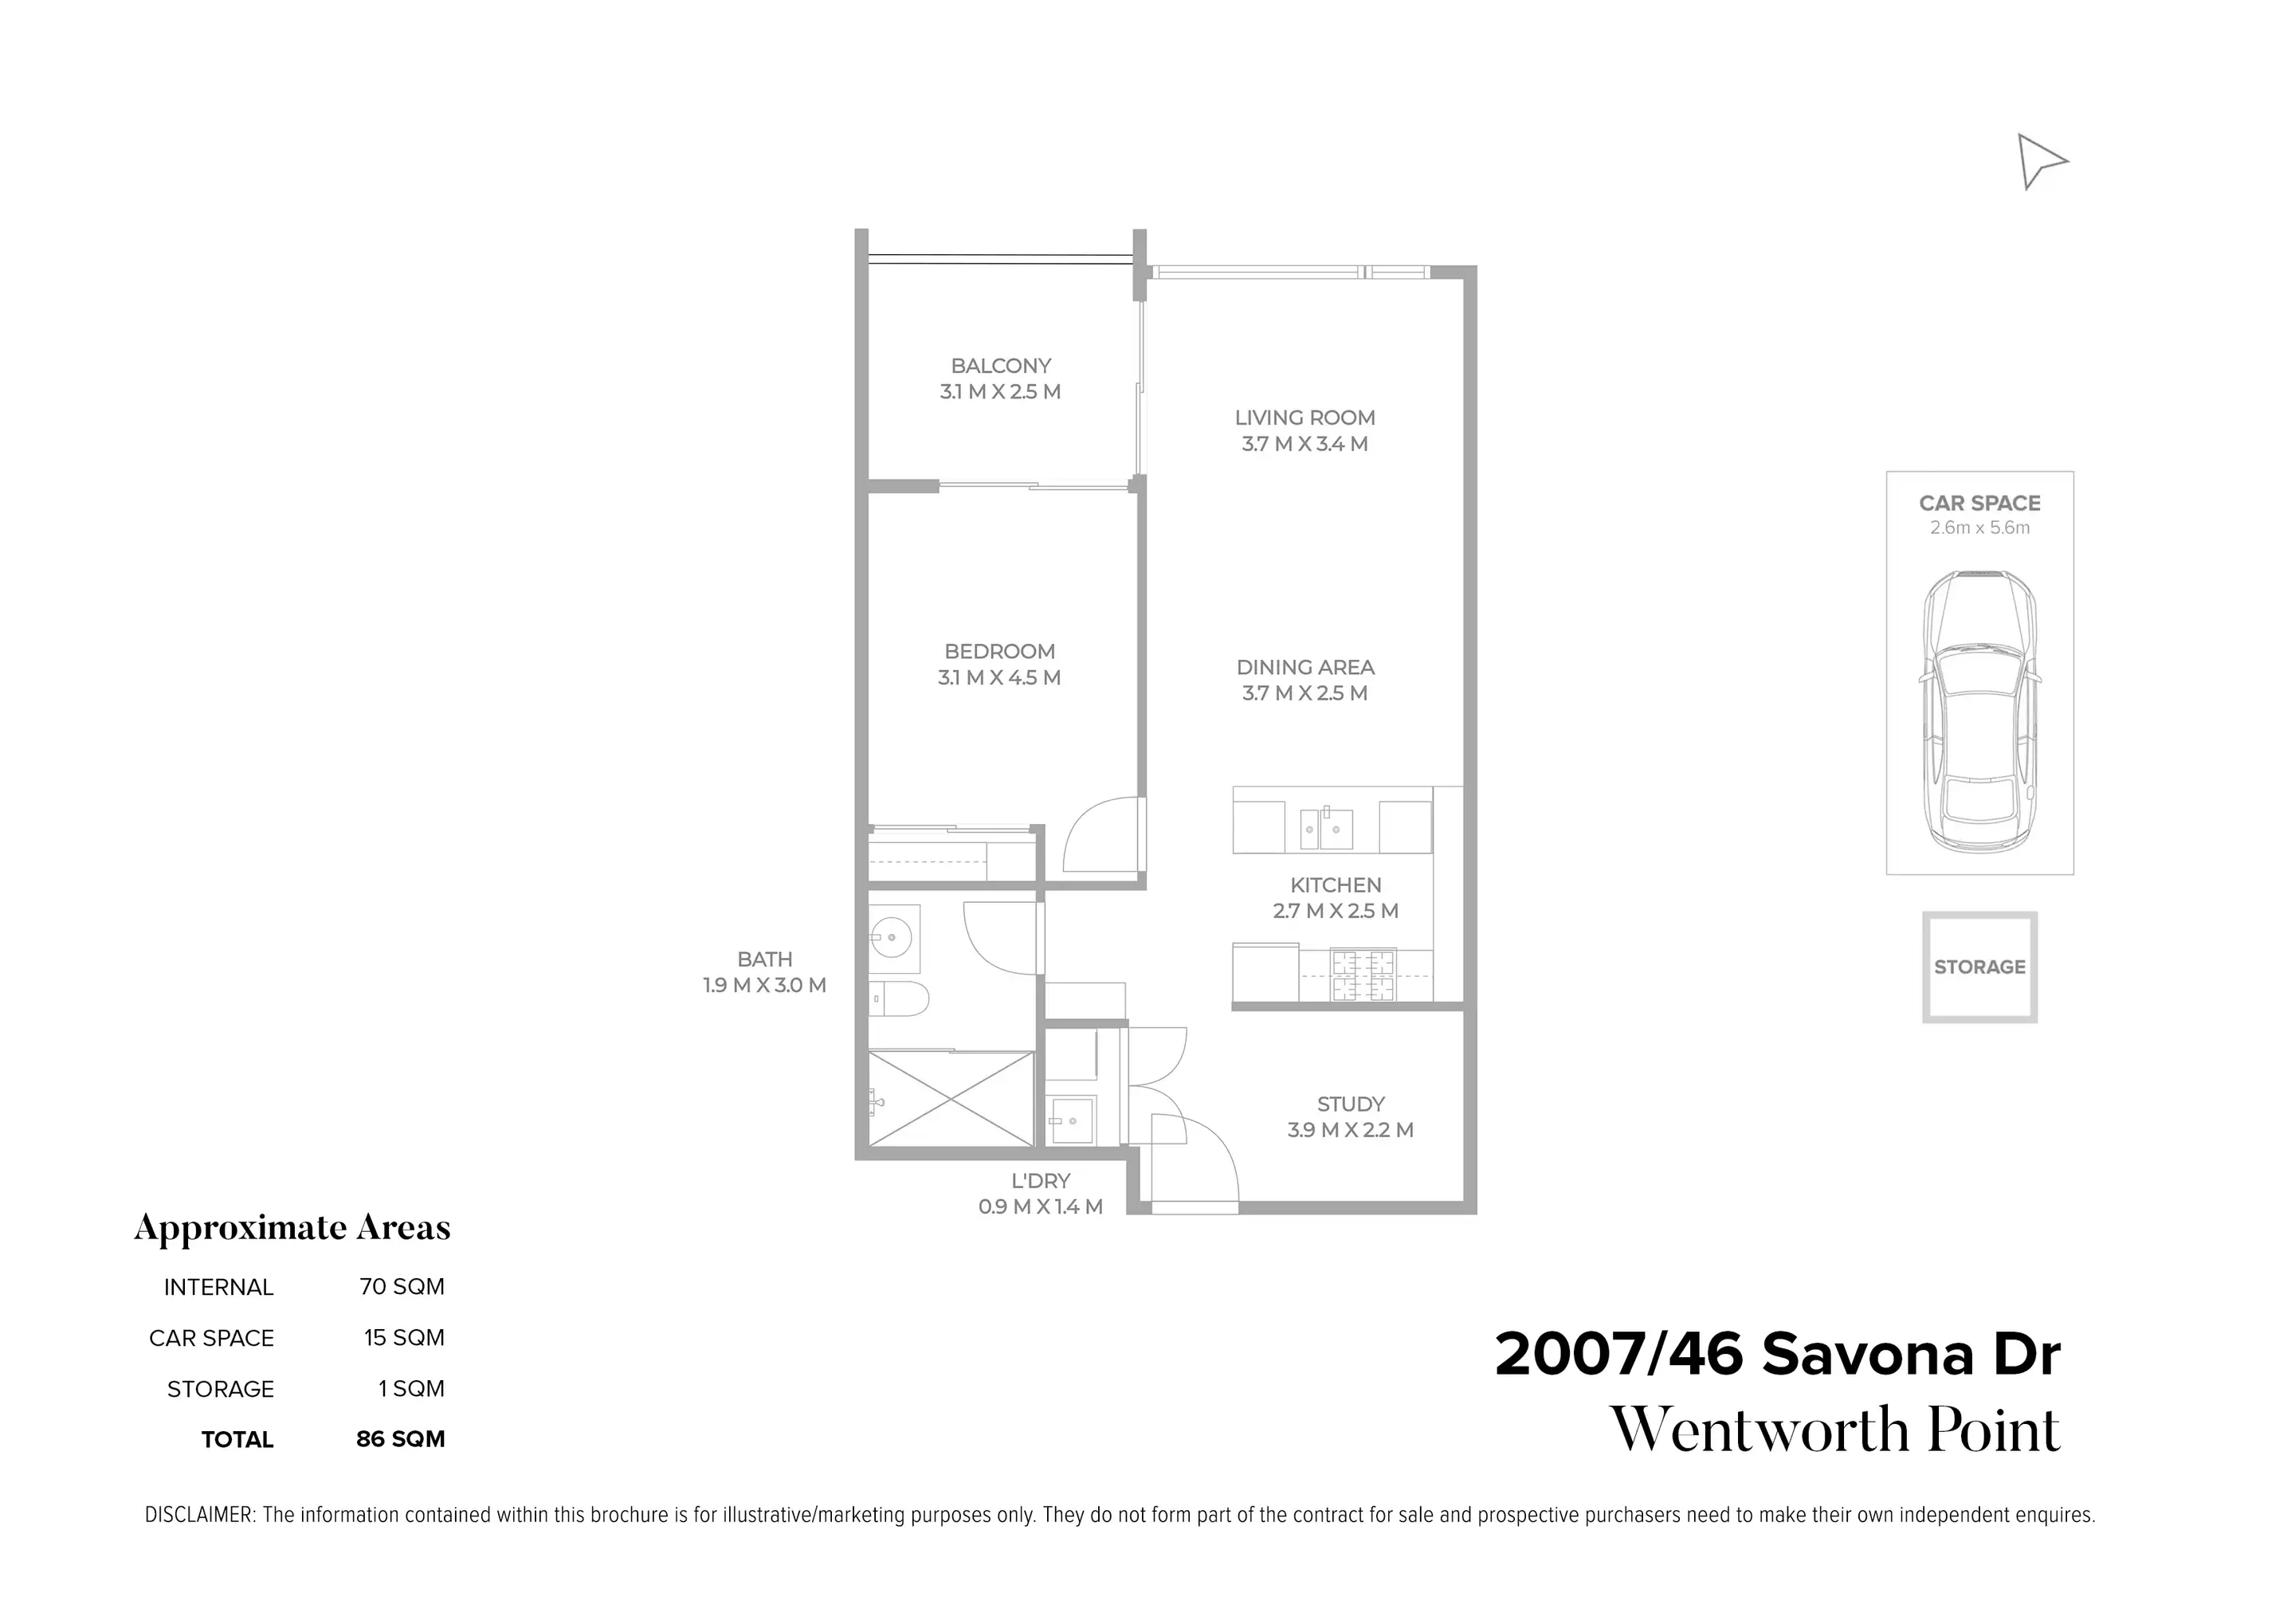 2007/46 Savona Drive, Wentworth Point Sold by Chidiac Realty - floorplan